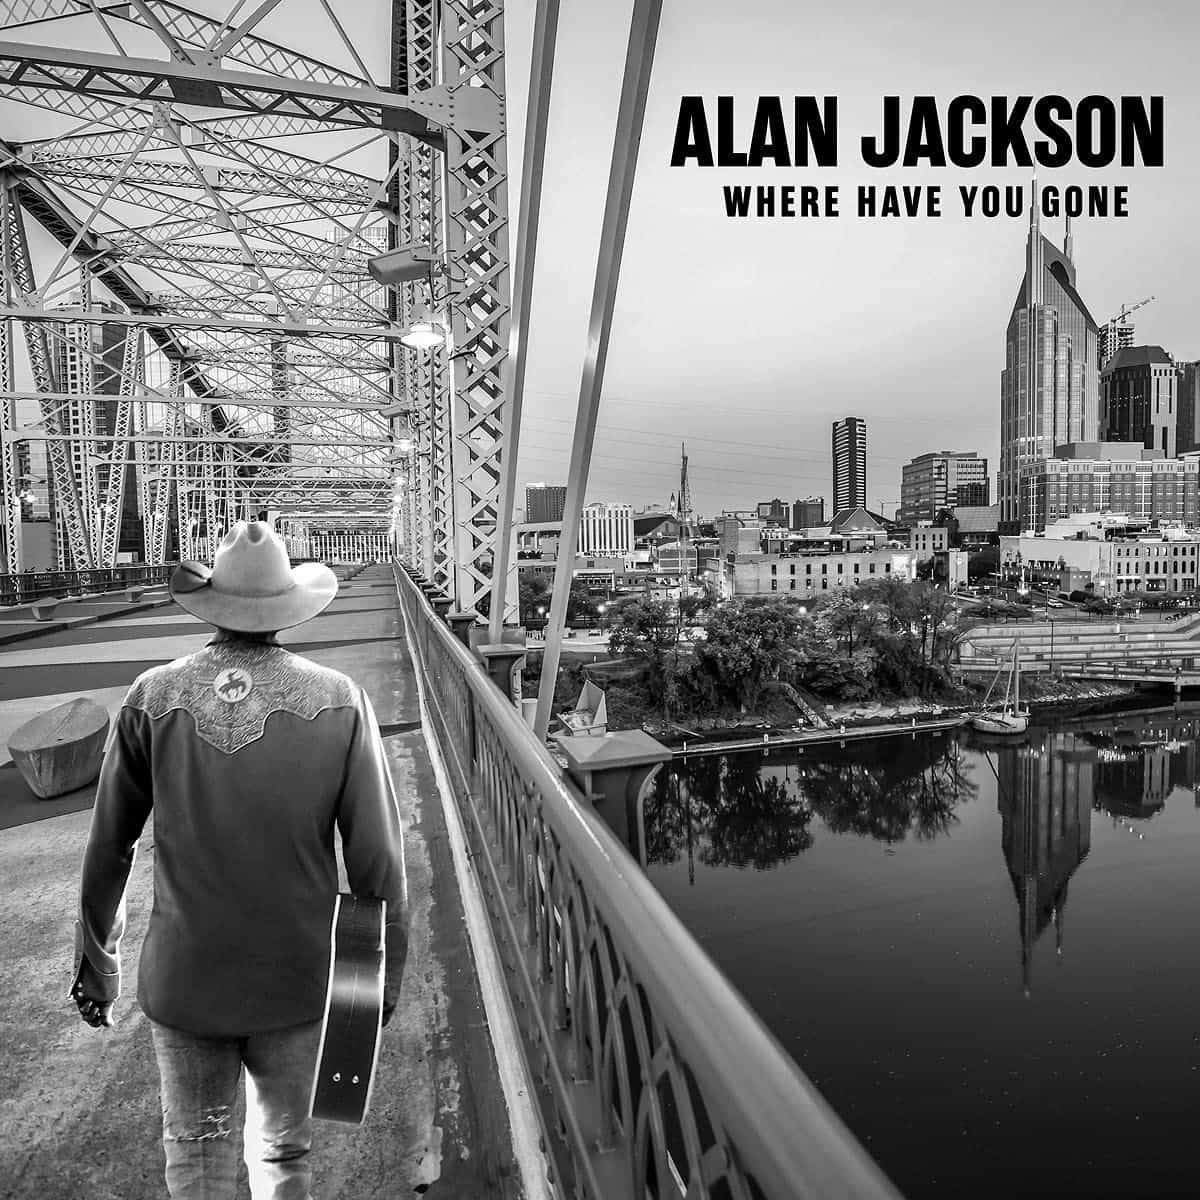 Alan Jackson 2021 - Neue Country-CD Where Have You Gone veröffentlicht